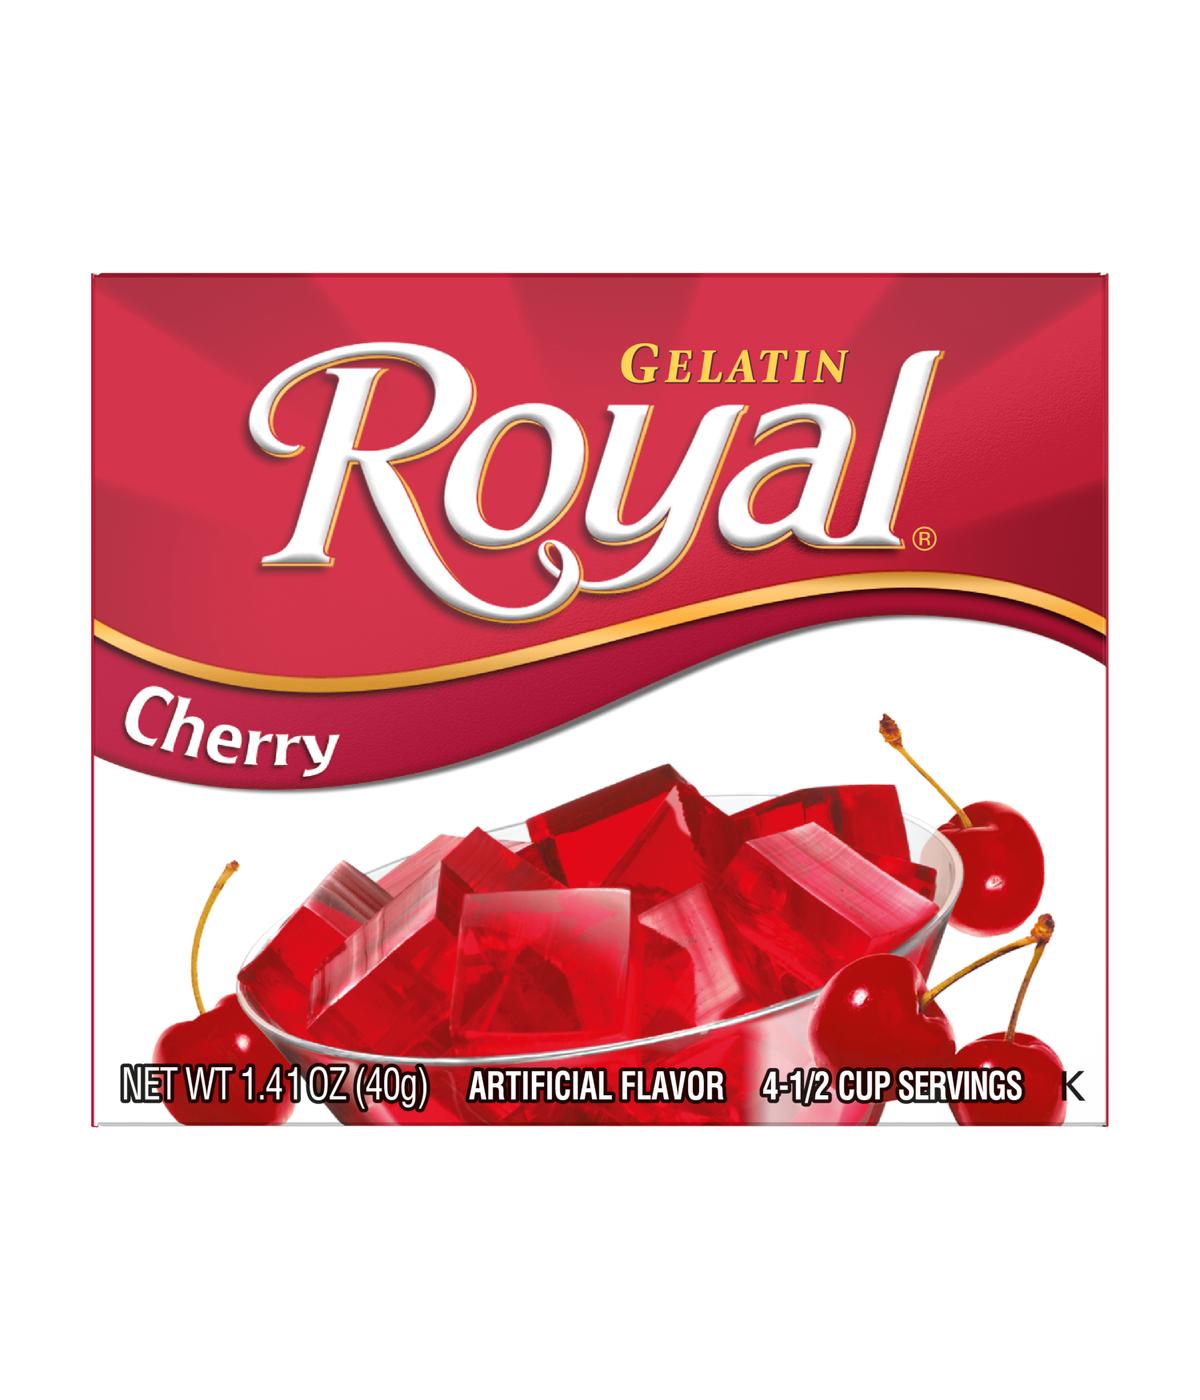 Royal Gelatin - Cherry; image 1 of 3